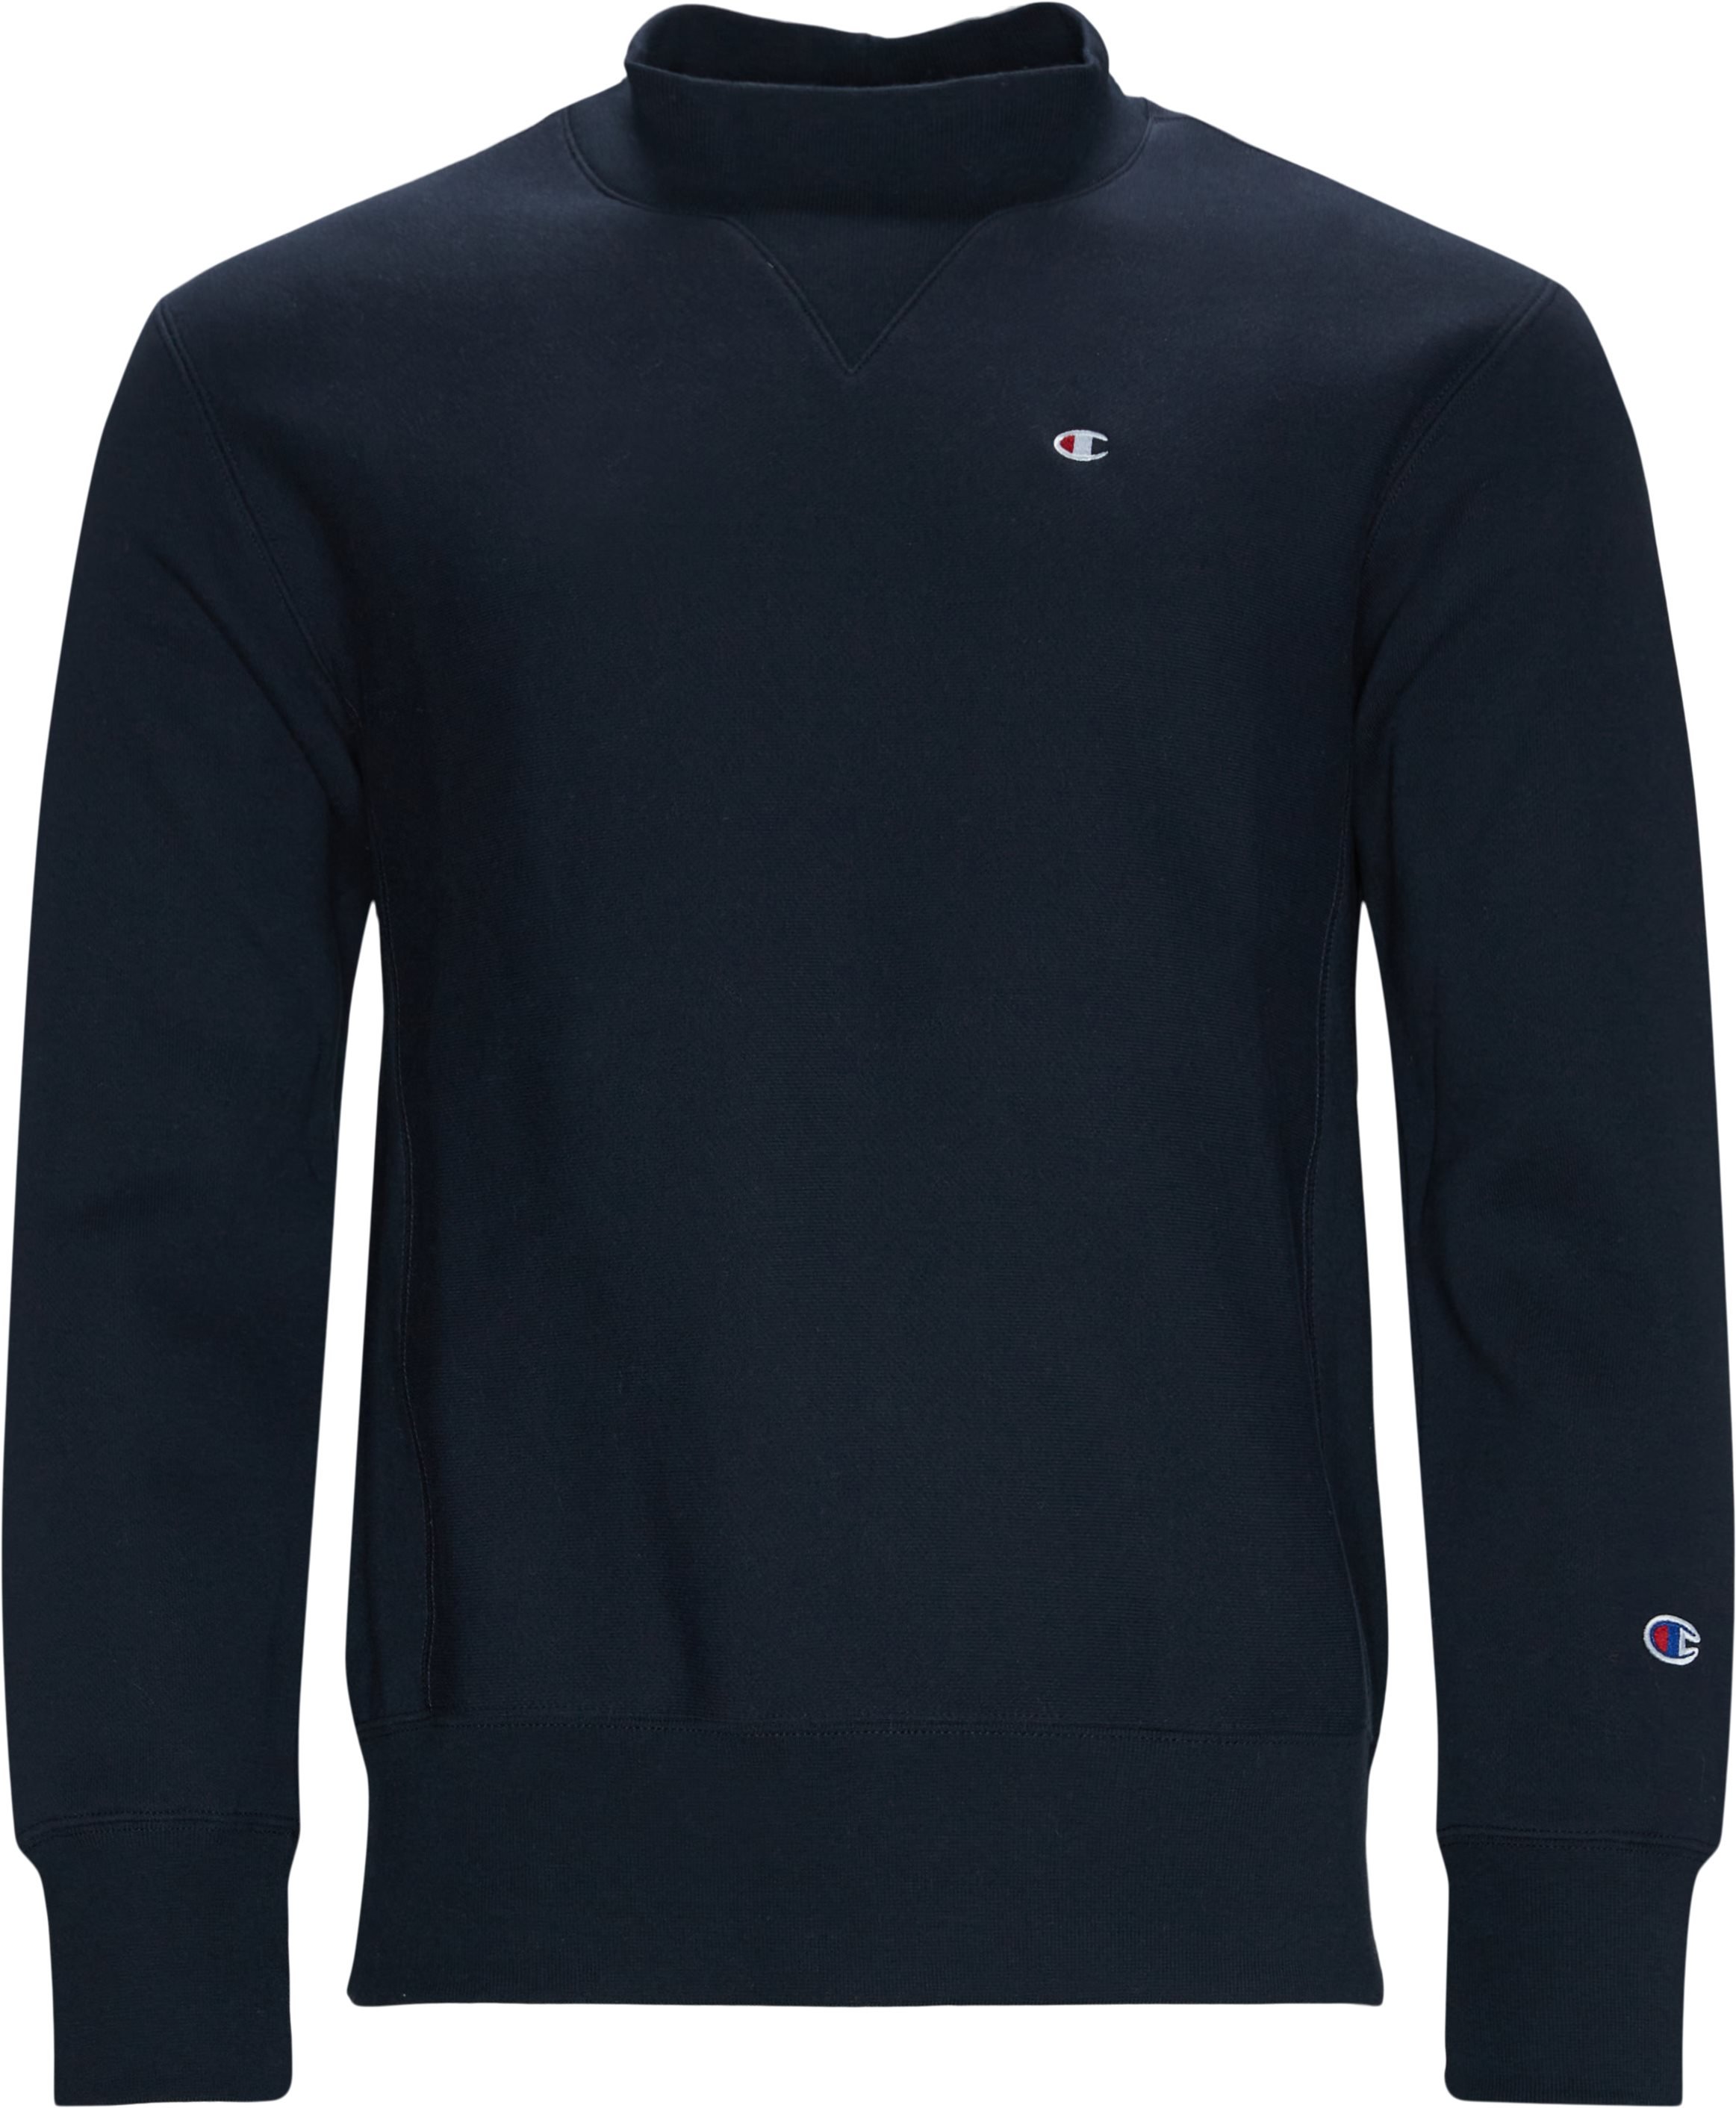 216498 Sweatshirt - Sweatshirts - Regular fit - Blå